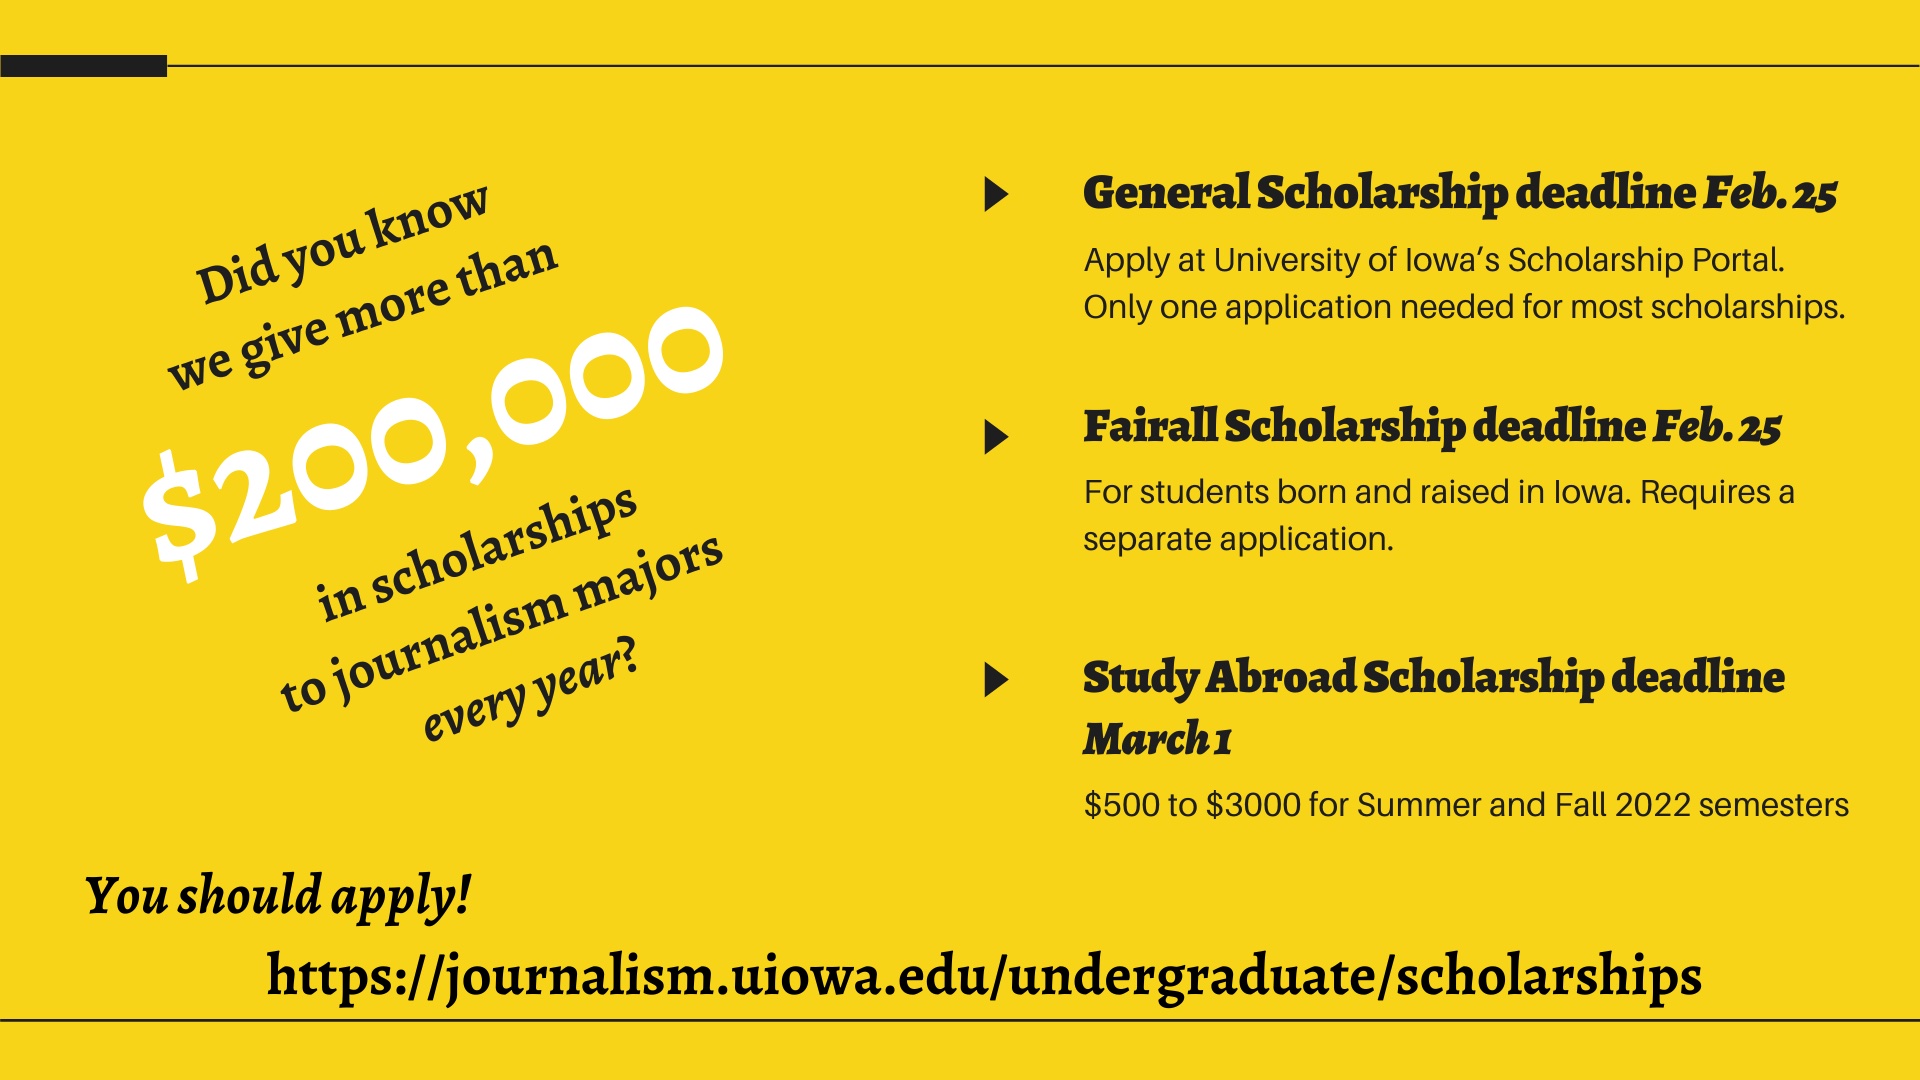 SJMC gives away $200,000 a year in scholarships apply by Feb 25 https://journalism.uiowa.edu/undergraduate/scholarships